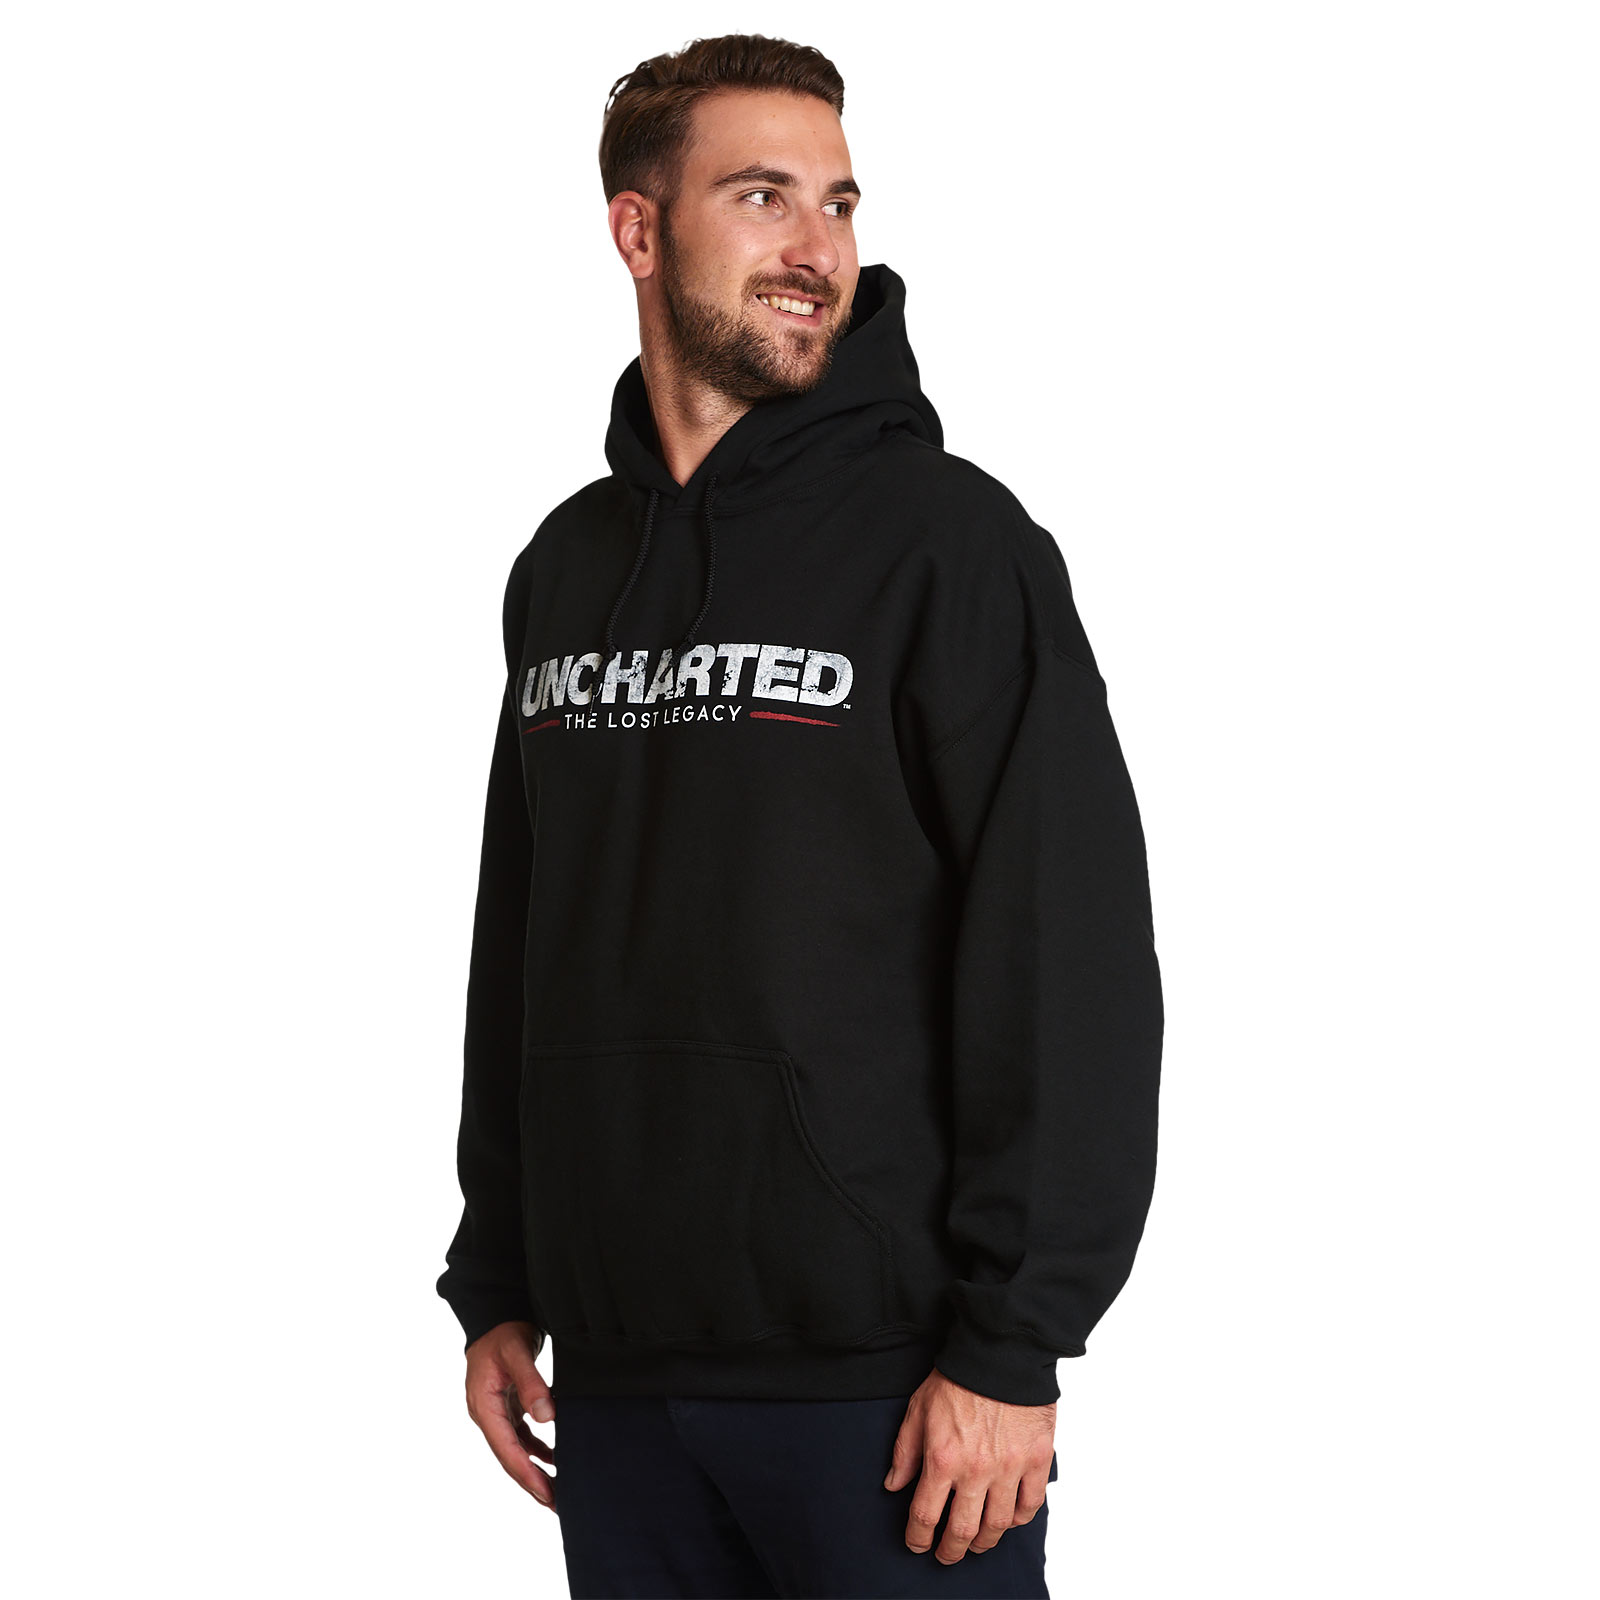 Uncharted - Logo Hoodie zwart